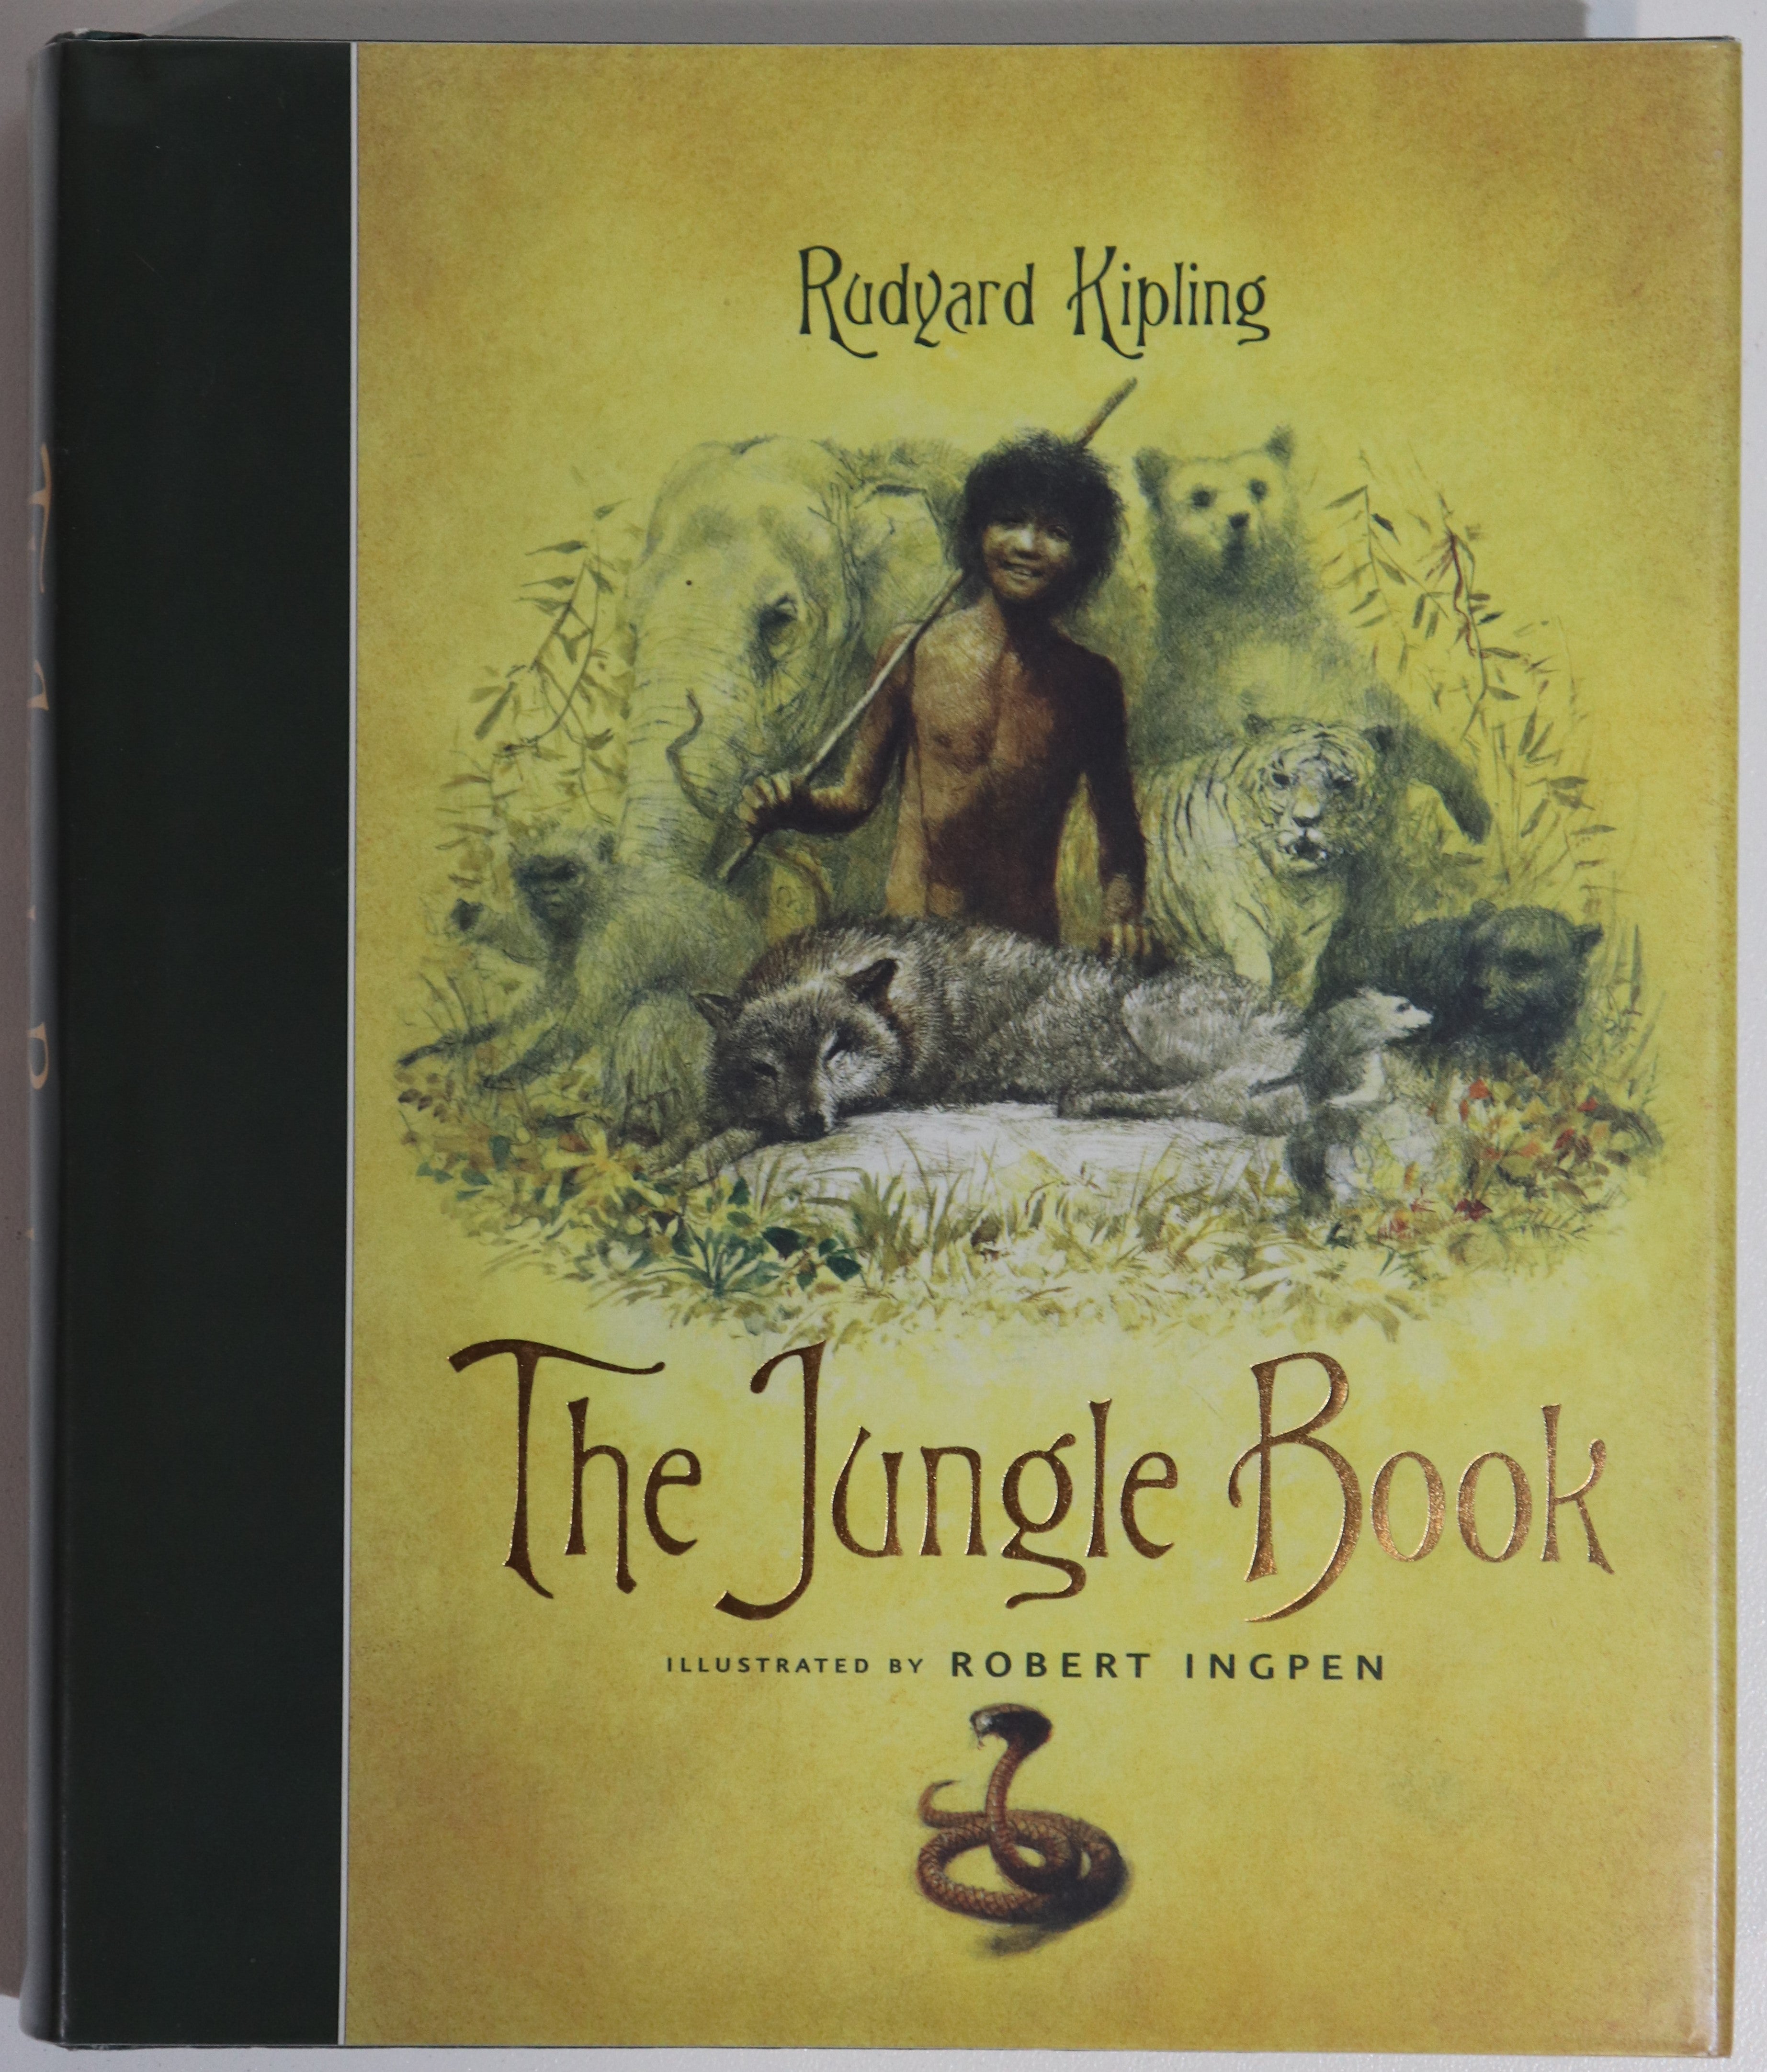 The Jungle Book by Rudyard Kipling - 2006 - Classic Children's Book